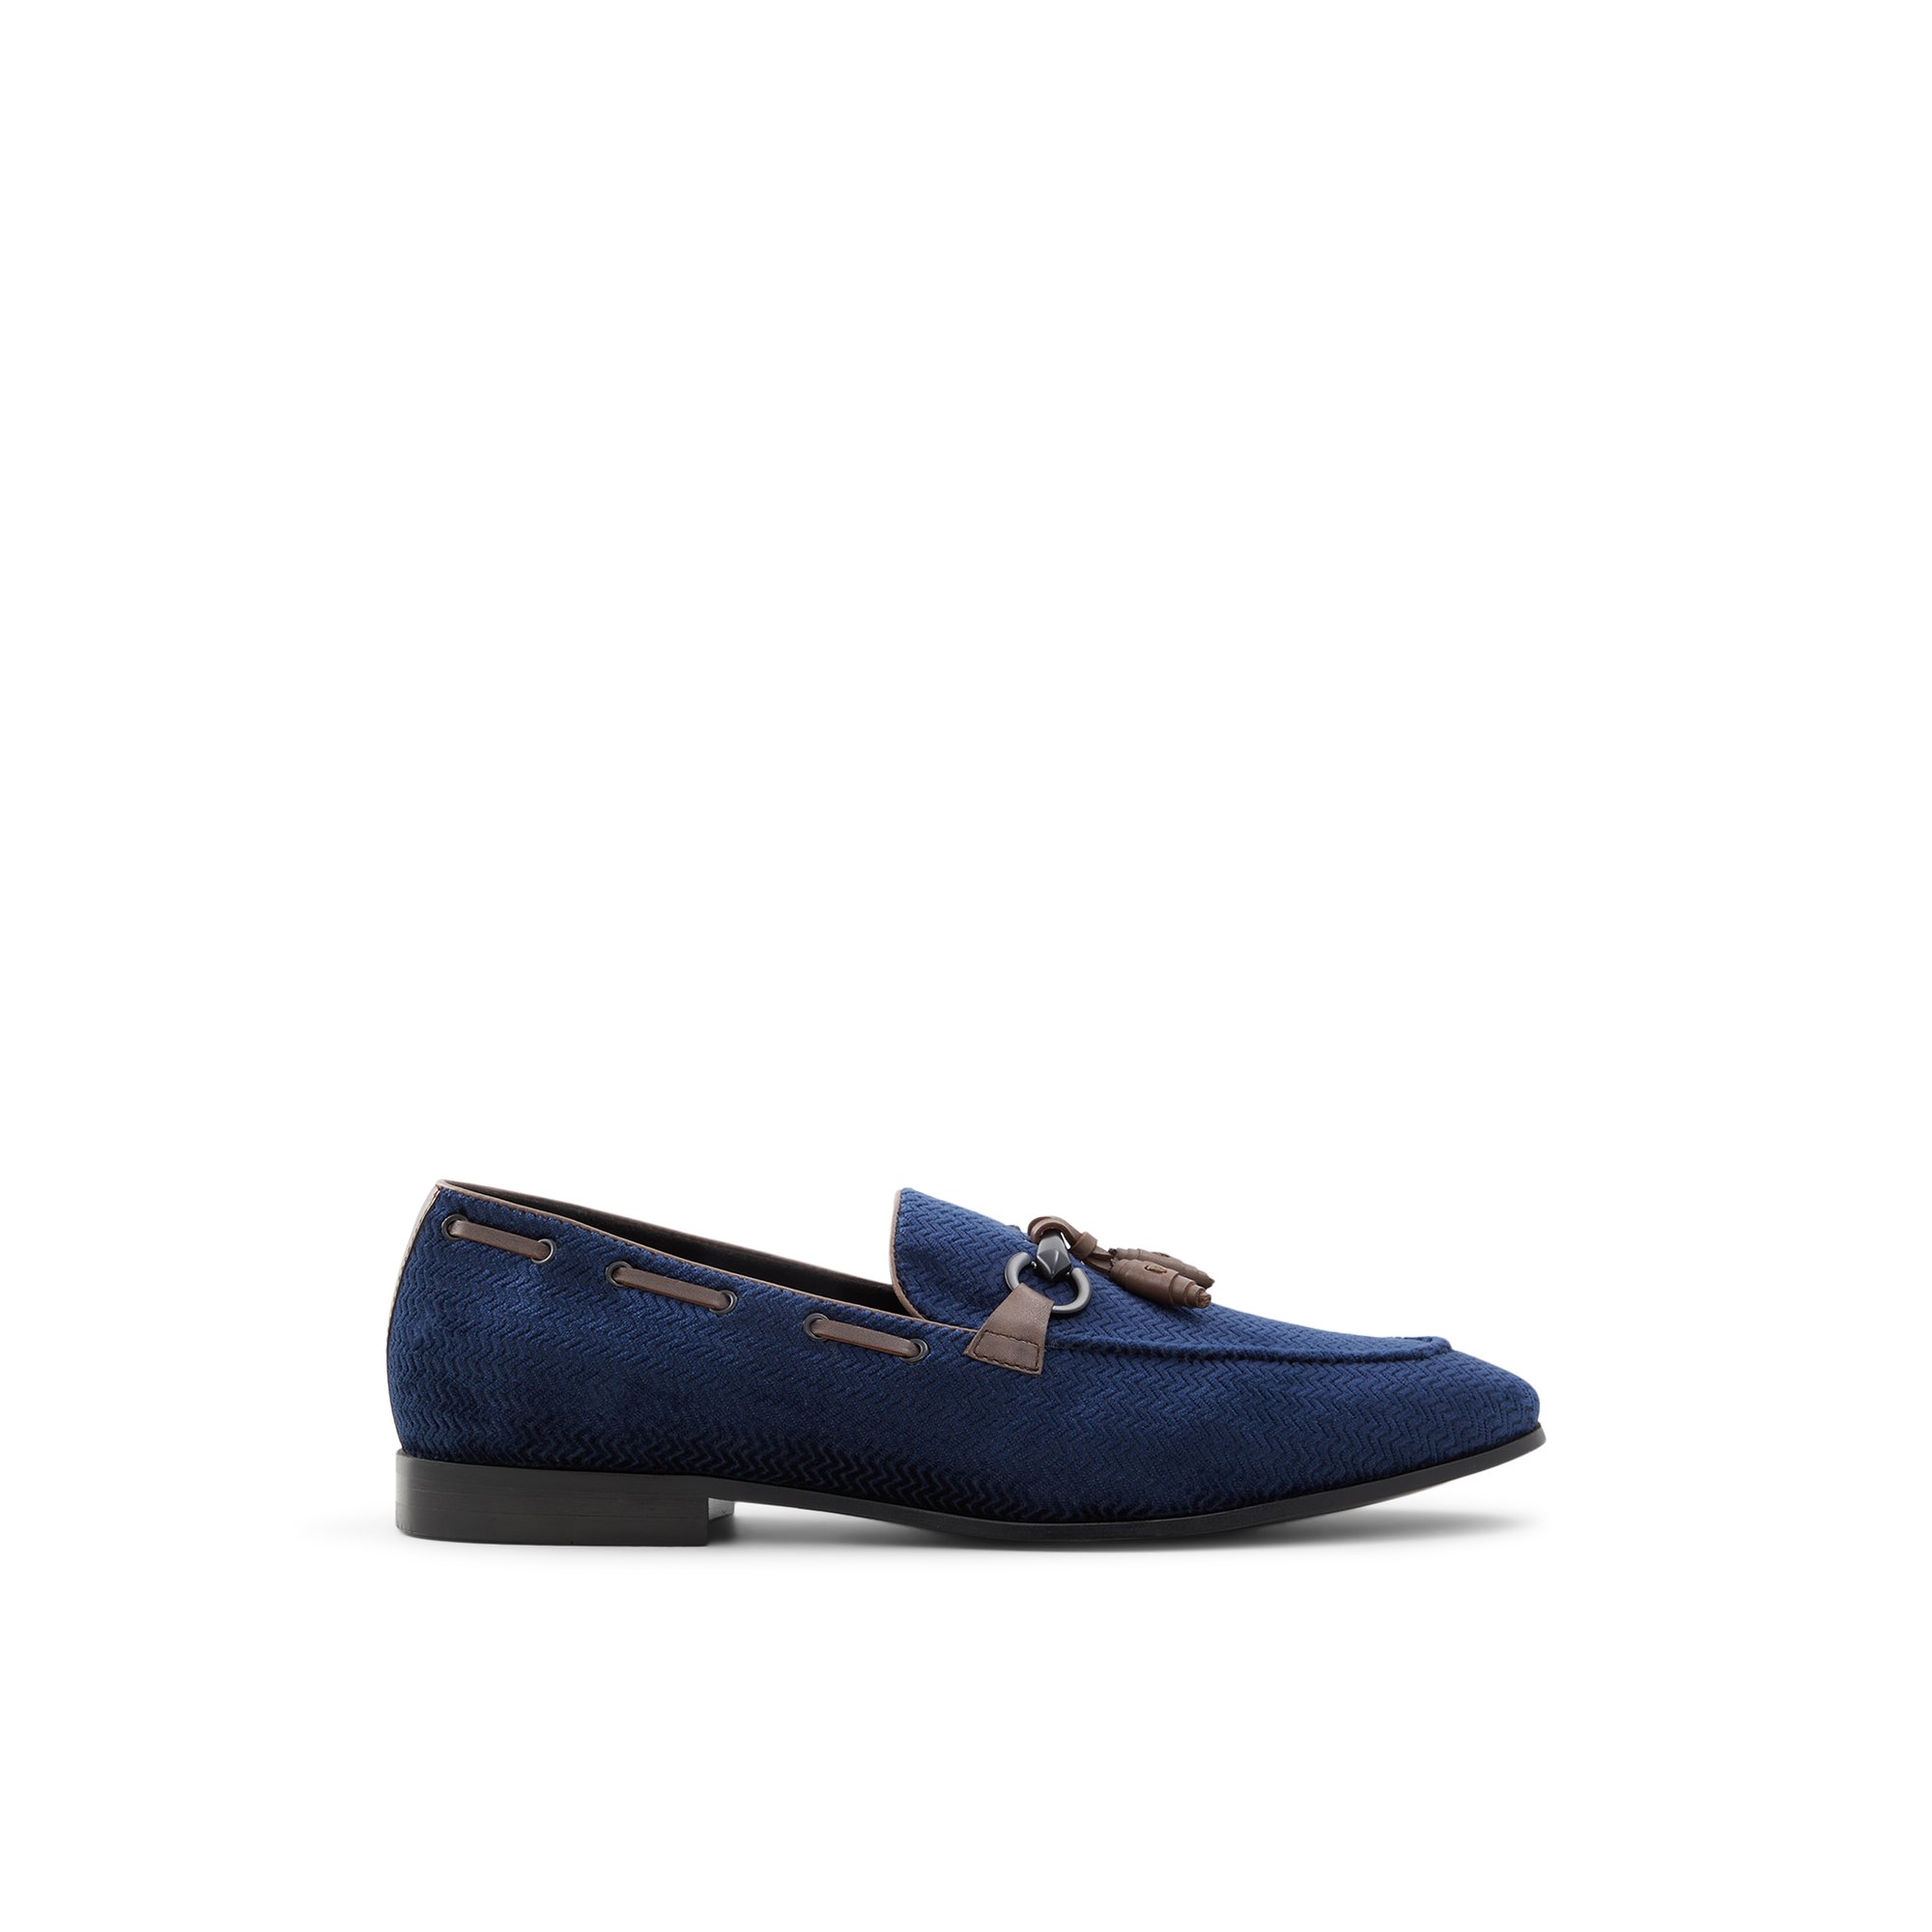 Image of ALDO Ampthill - Men's Loafers and Slip on - Blue, Size 8